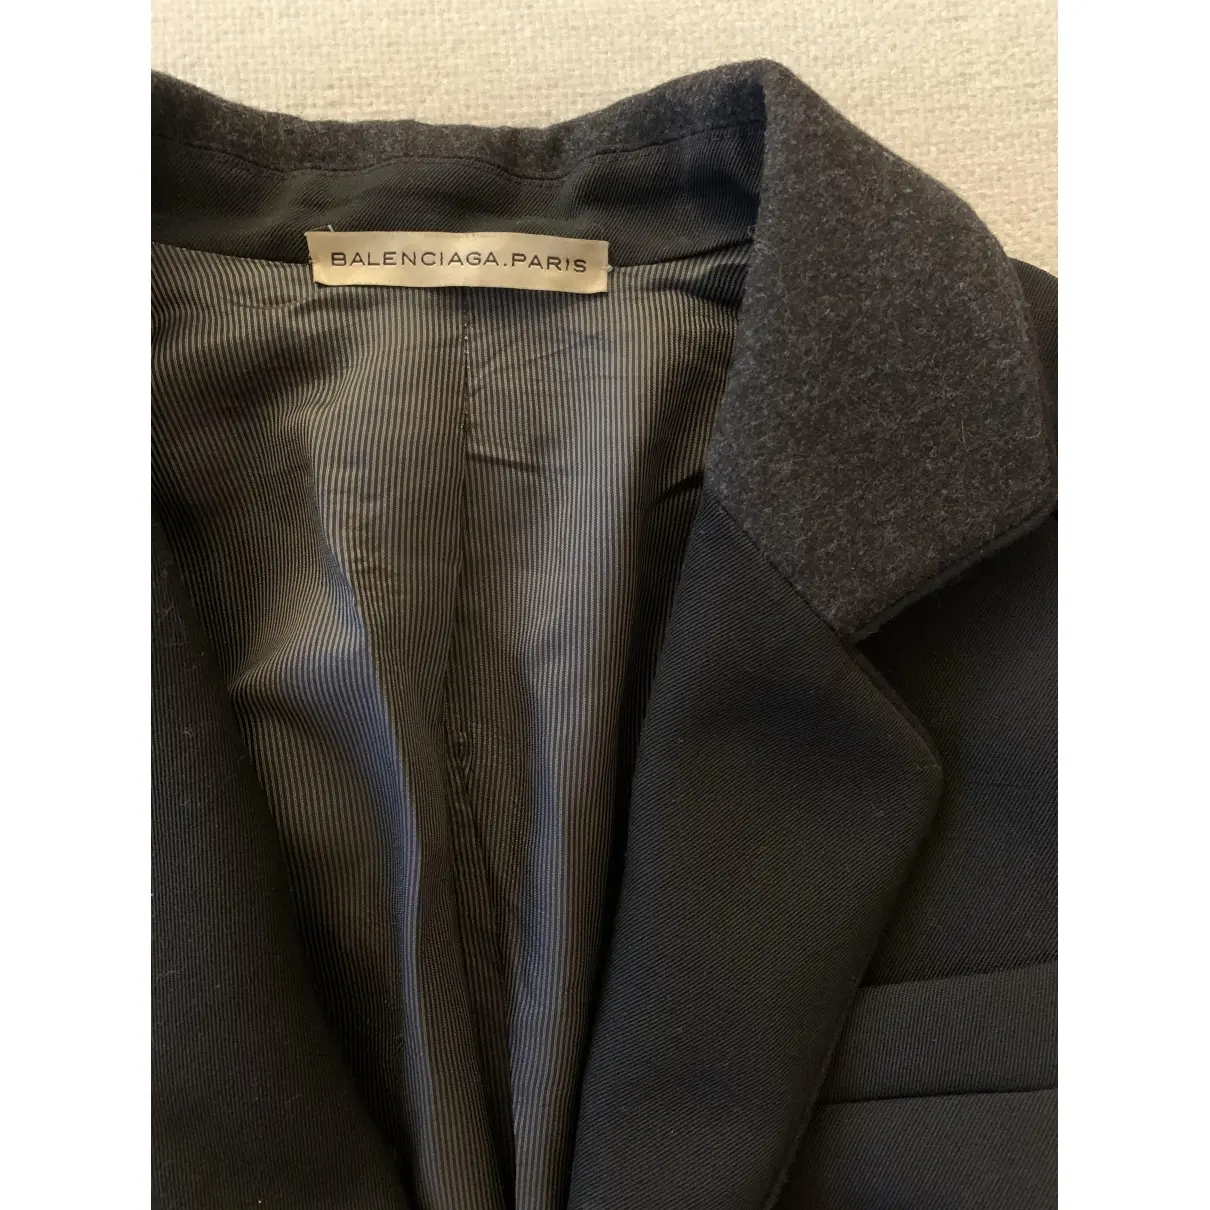 Balenciaga Wool short vest for sale